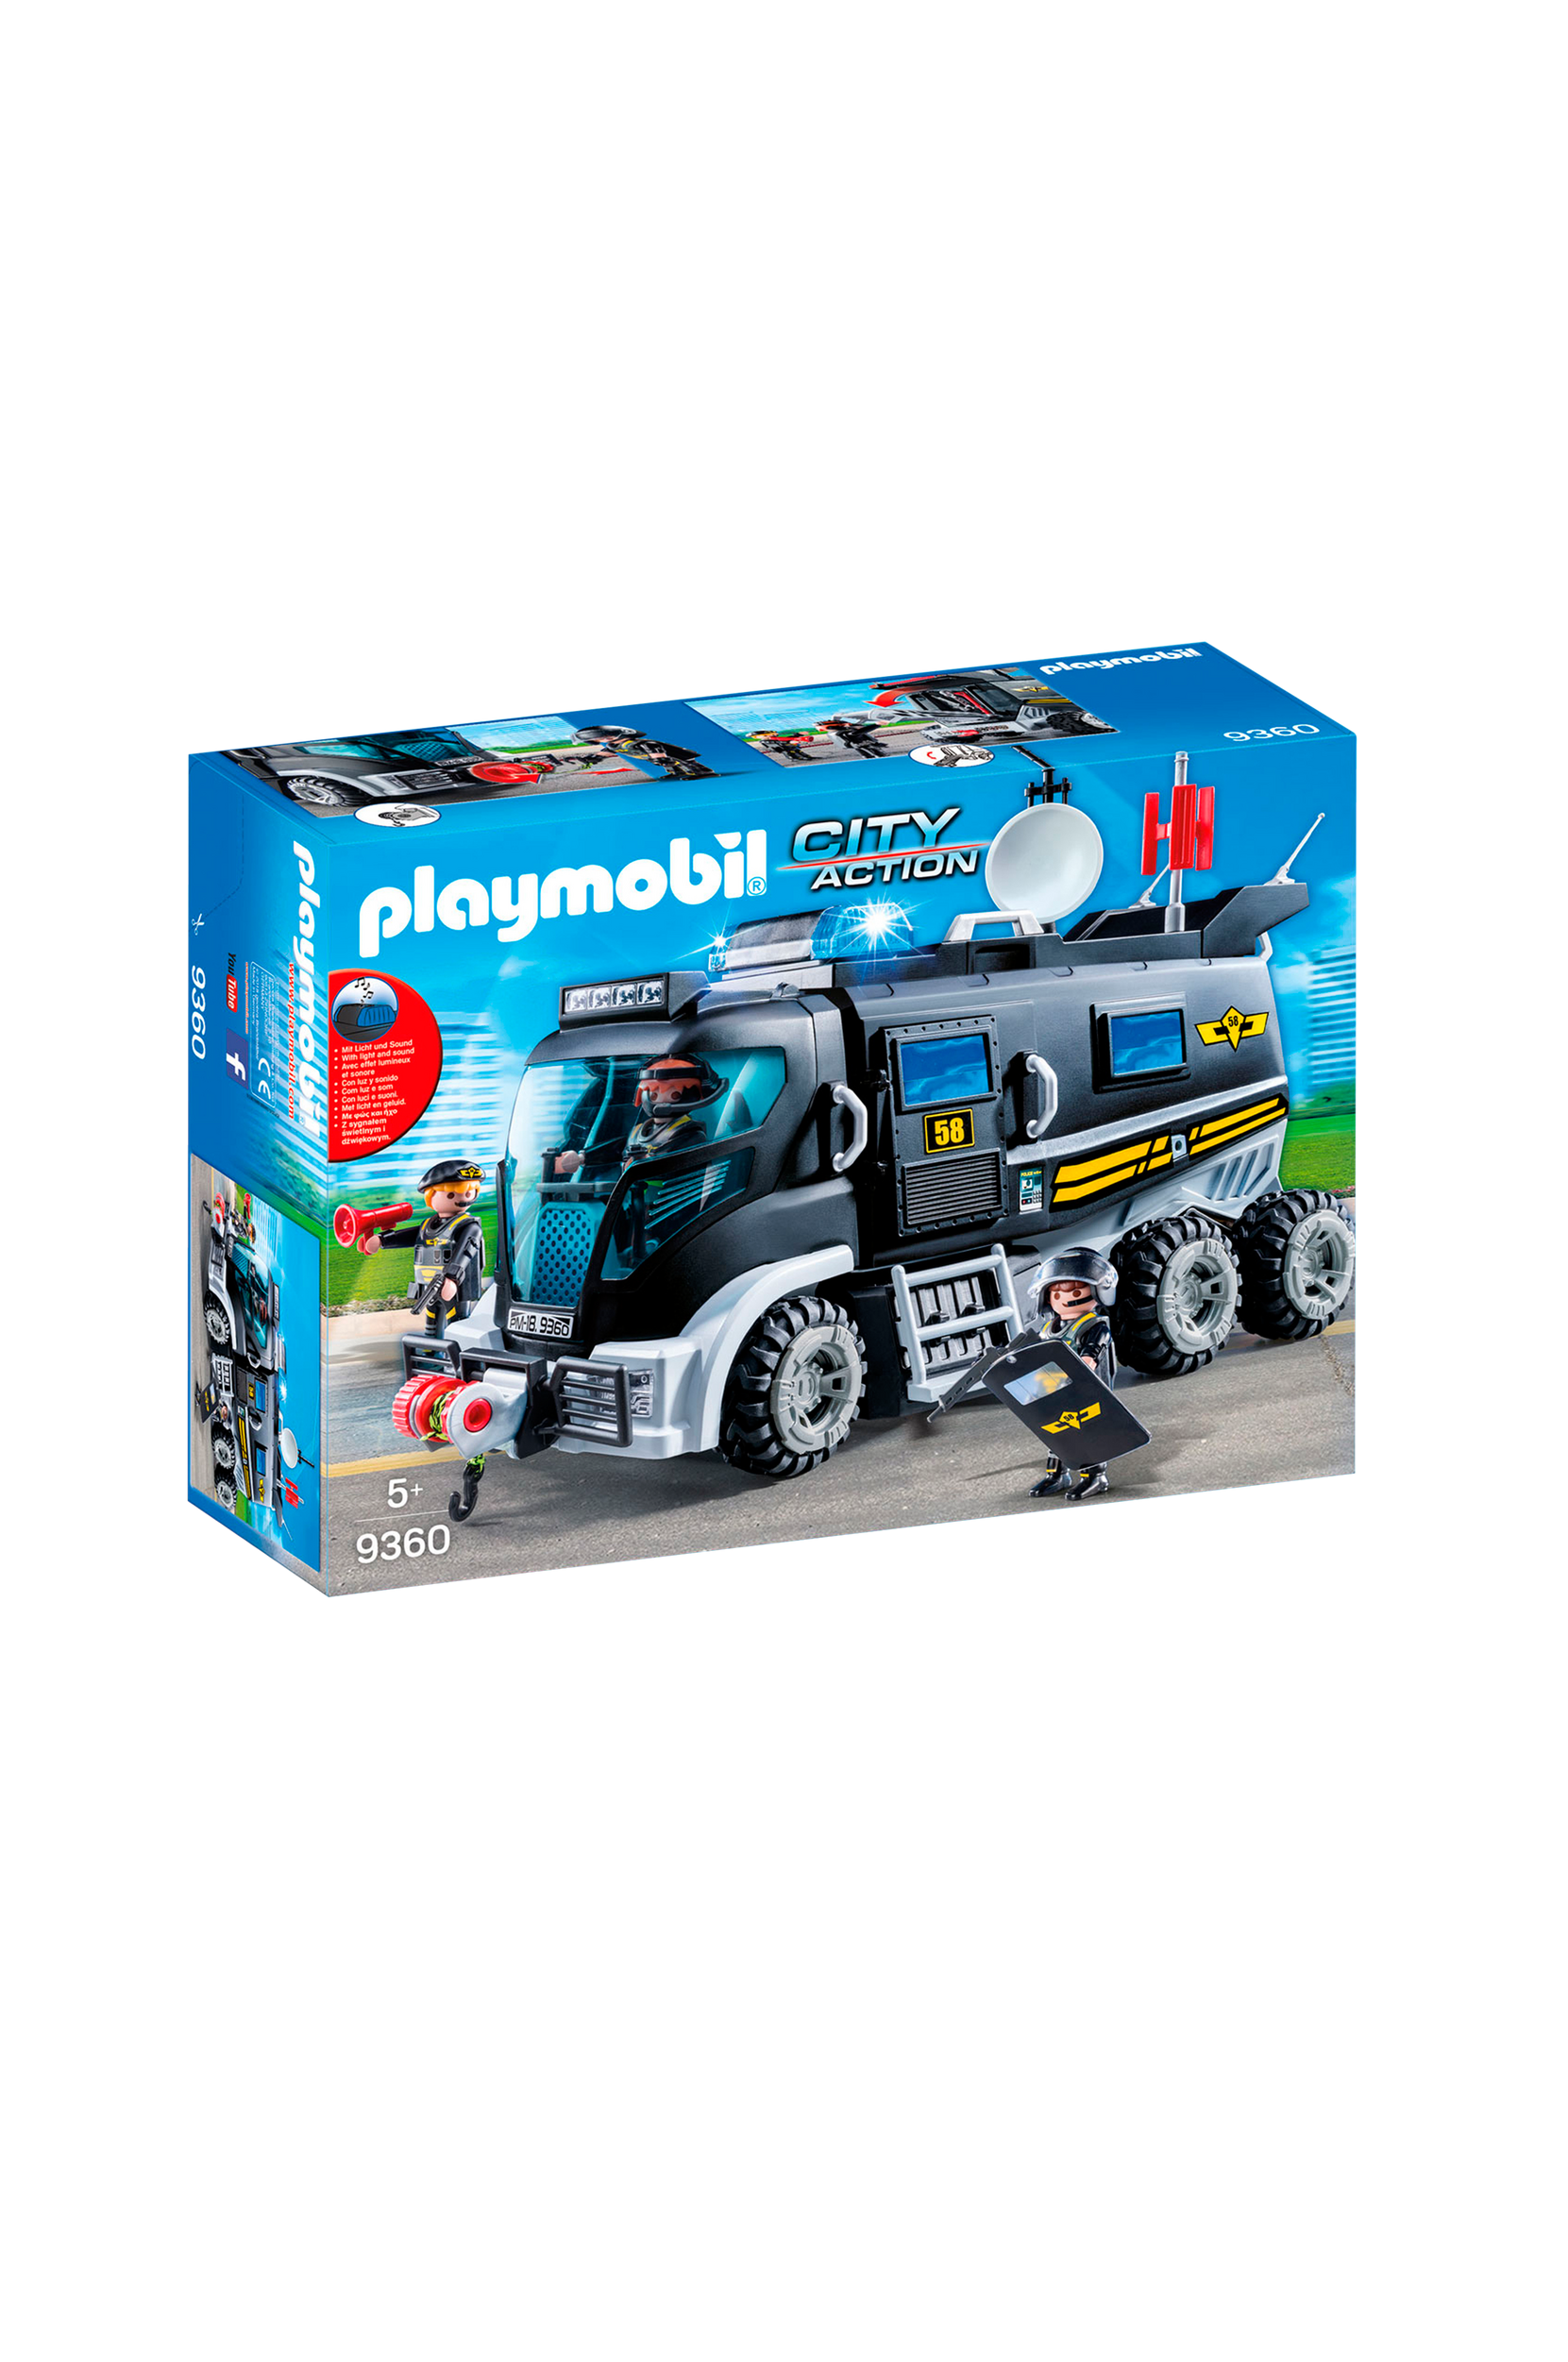 Playmobil - City Action Insatsfordon Ljus